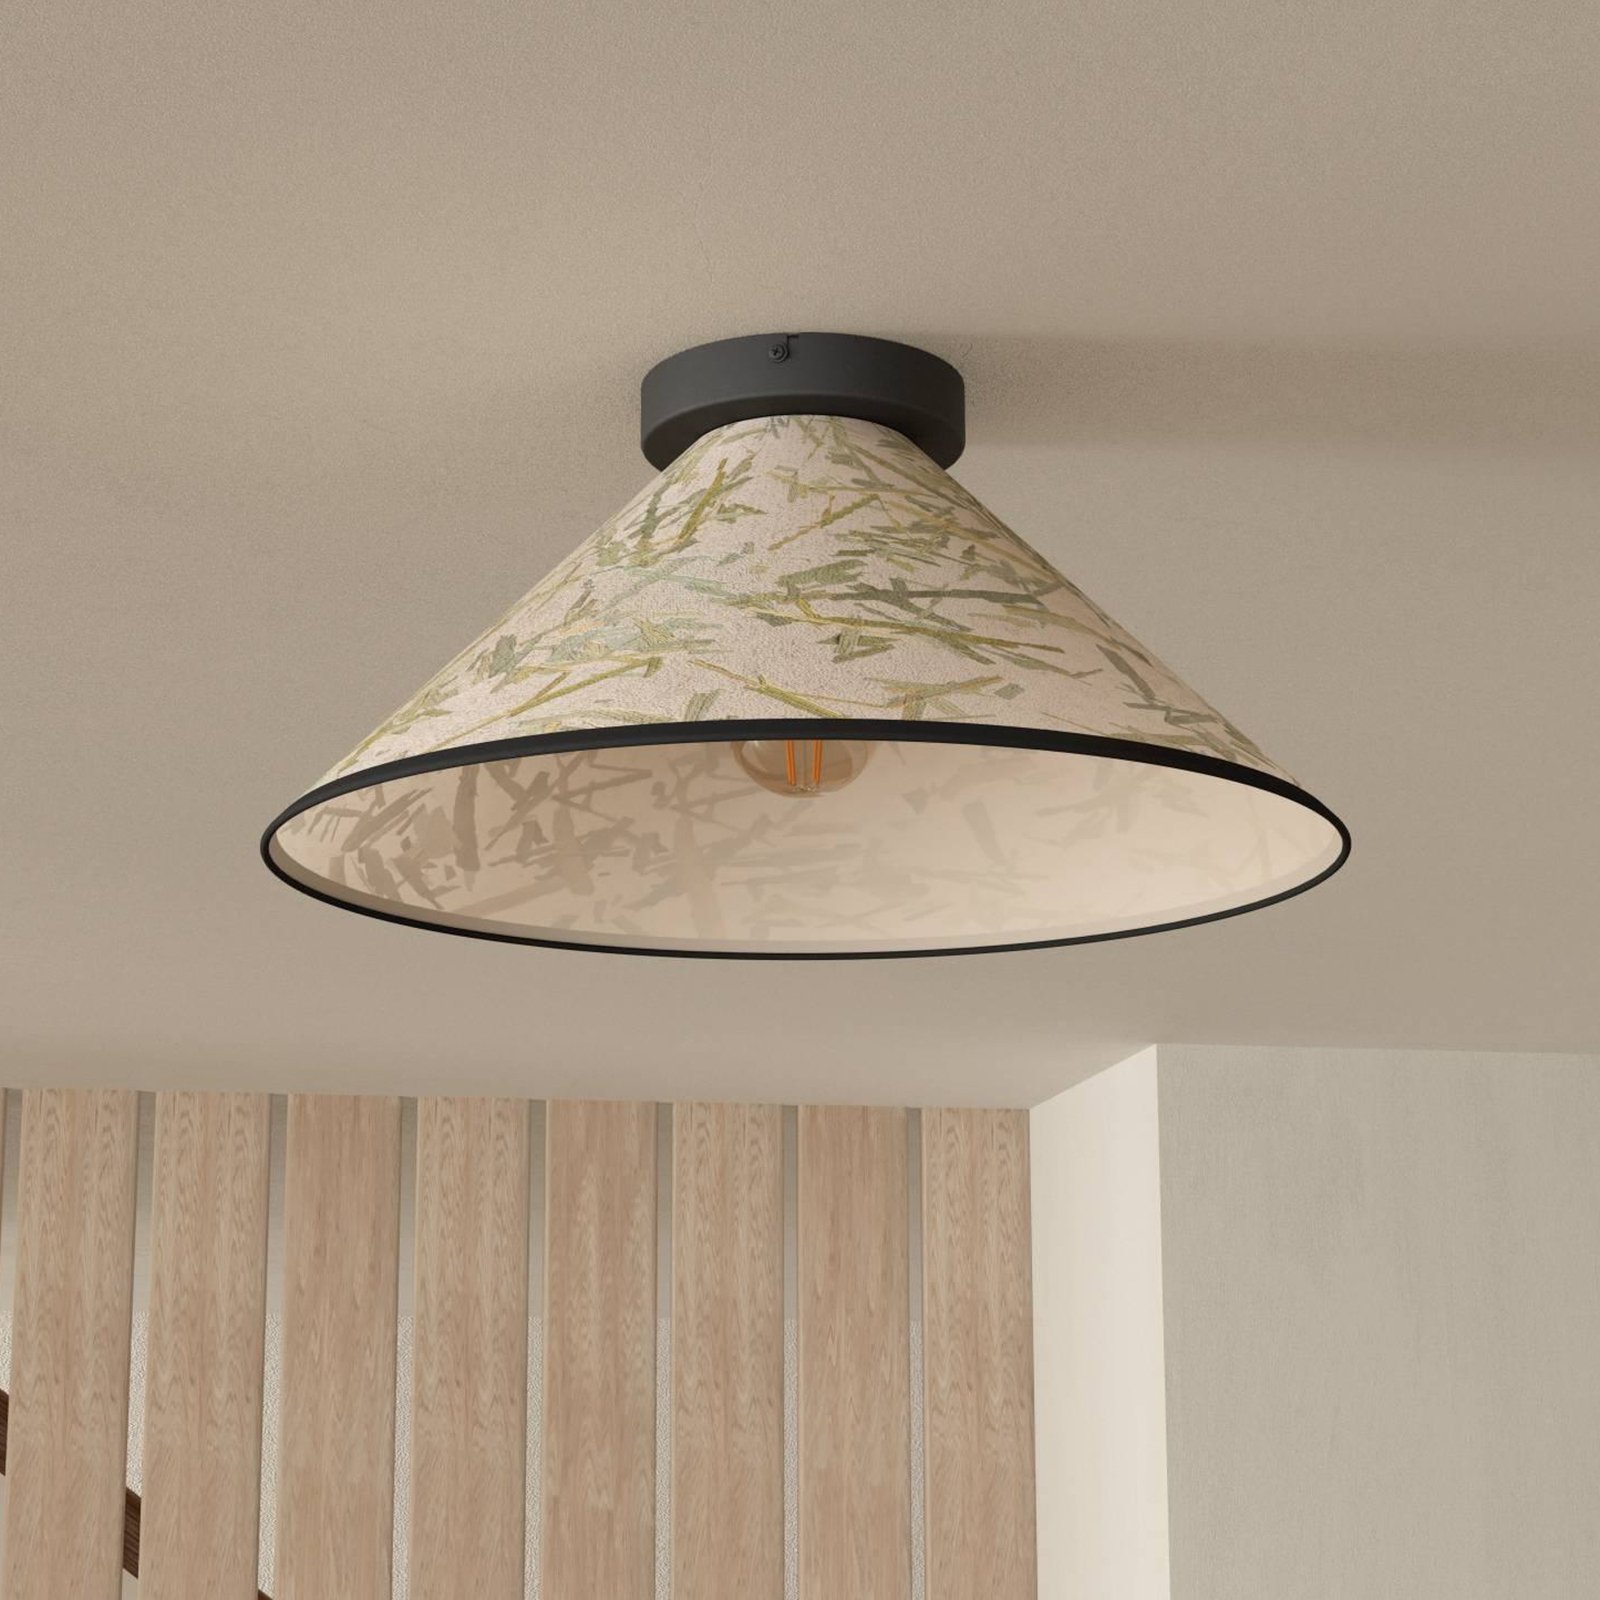 Oxpark plafondlamp, Ø 42 cm, groen/wit/zwart, stof